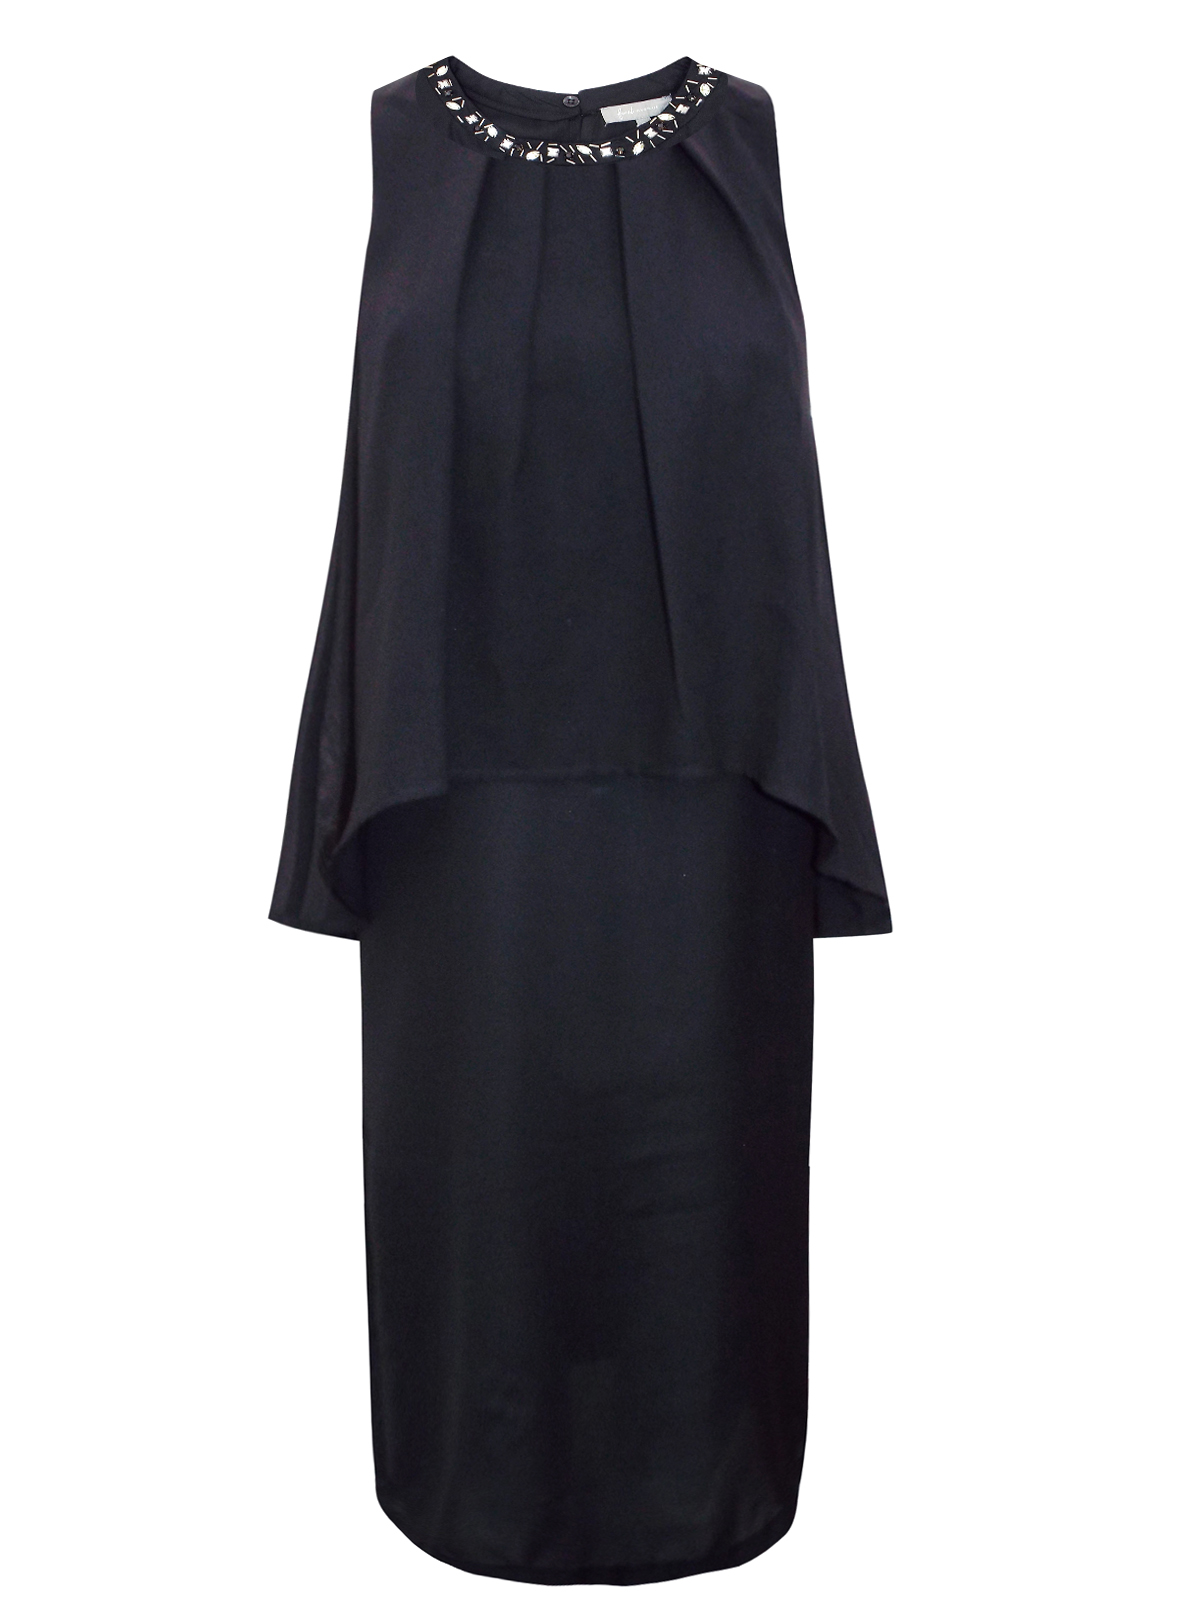 First Avenue BLACK Jewel Embellished Overlayer Shift Dress - Size 10 to 20